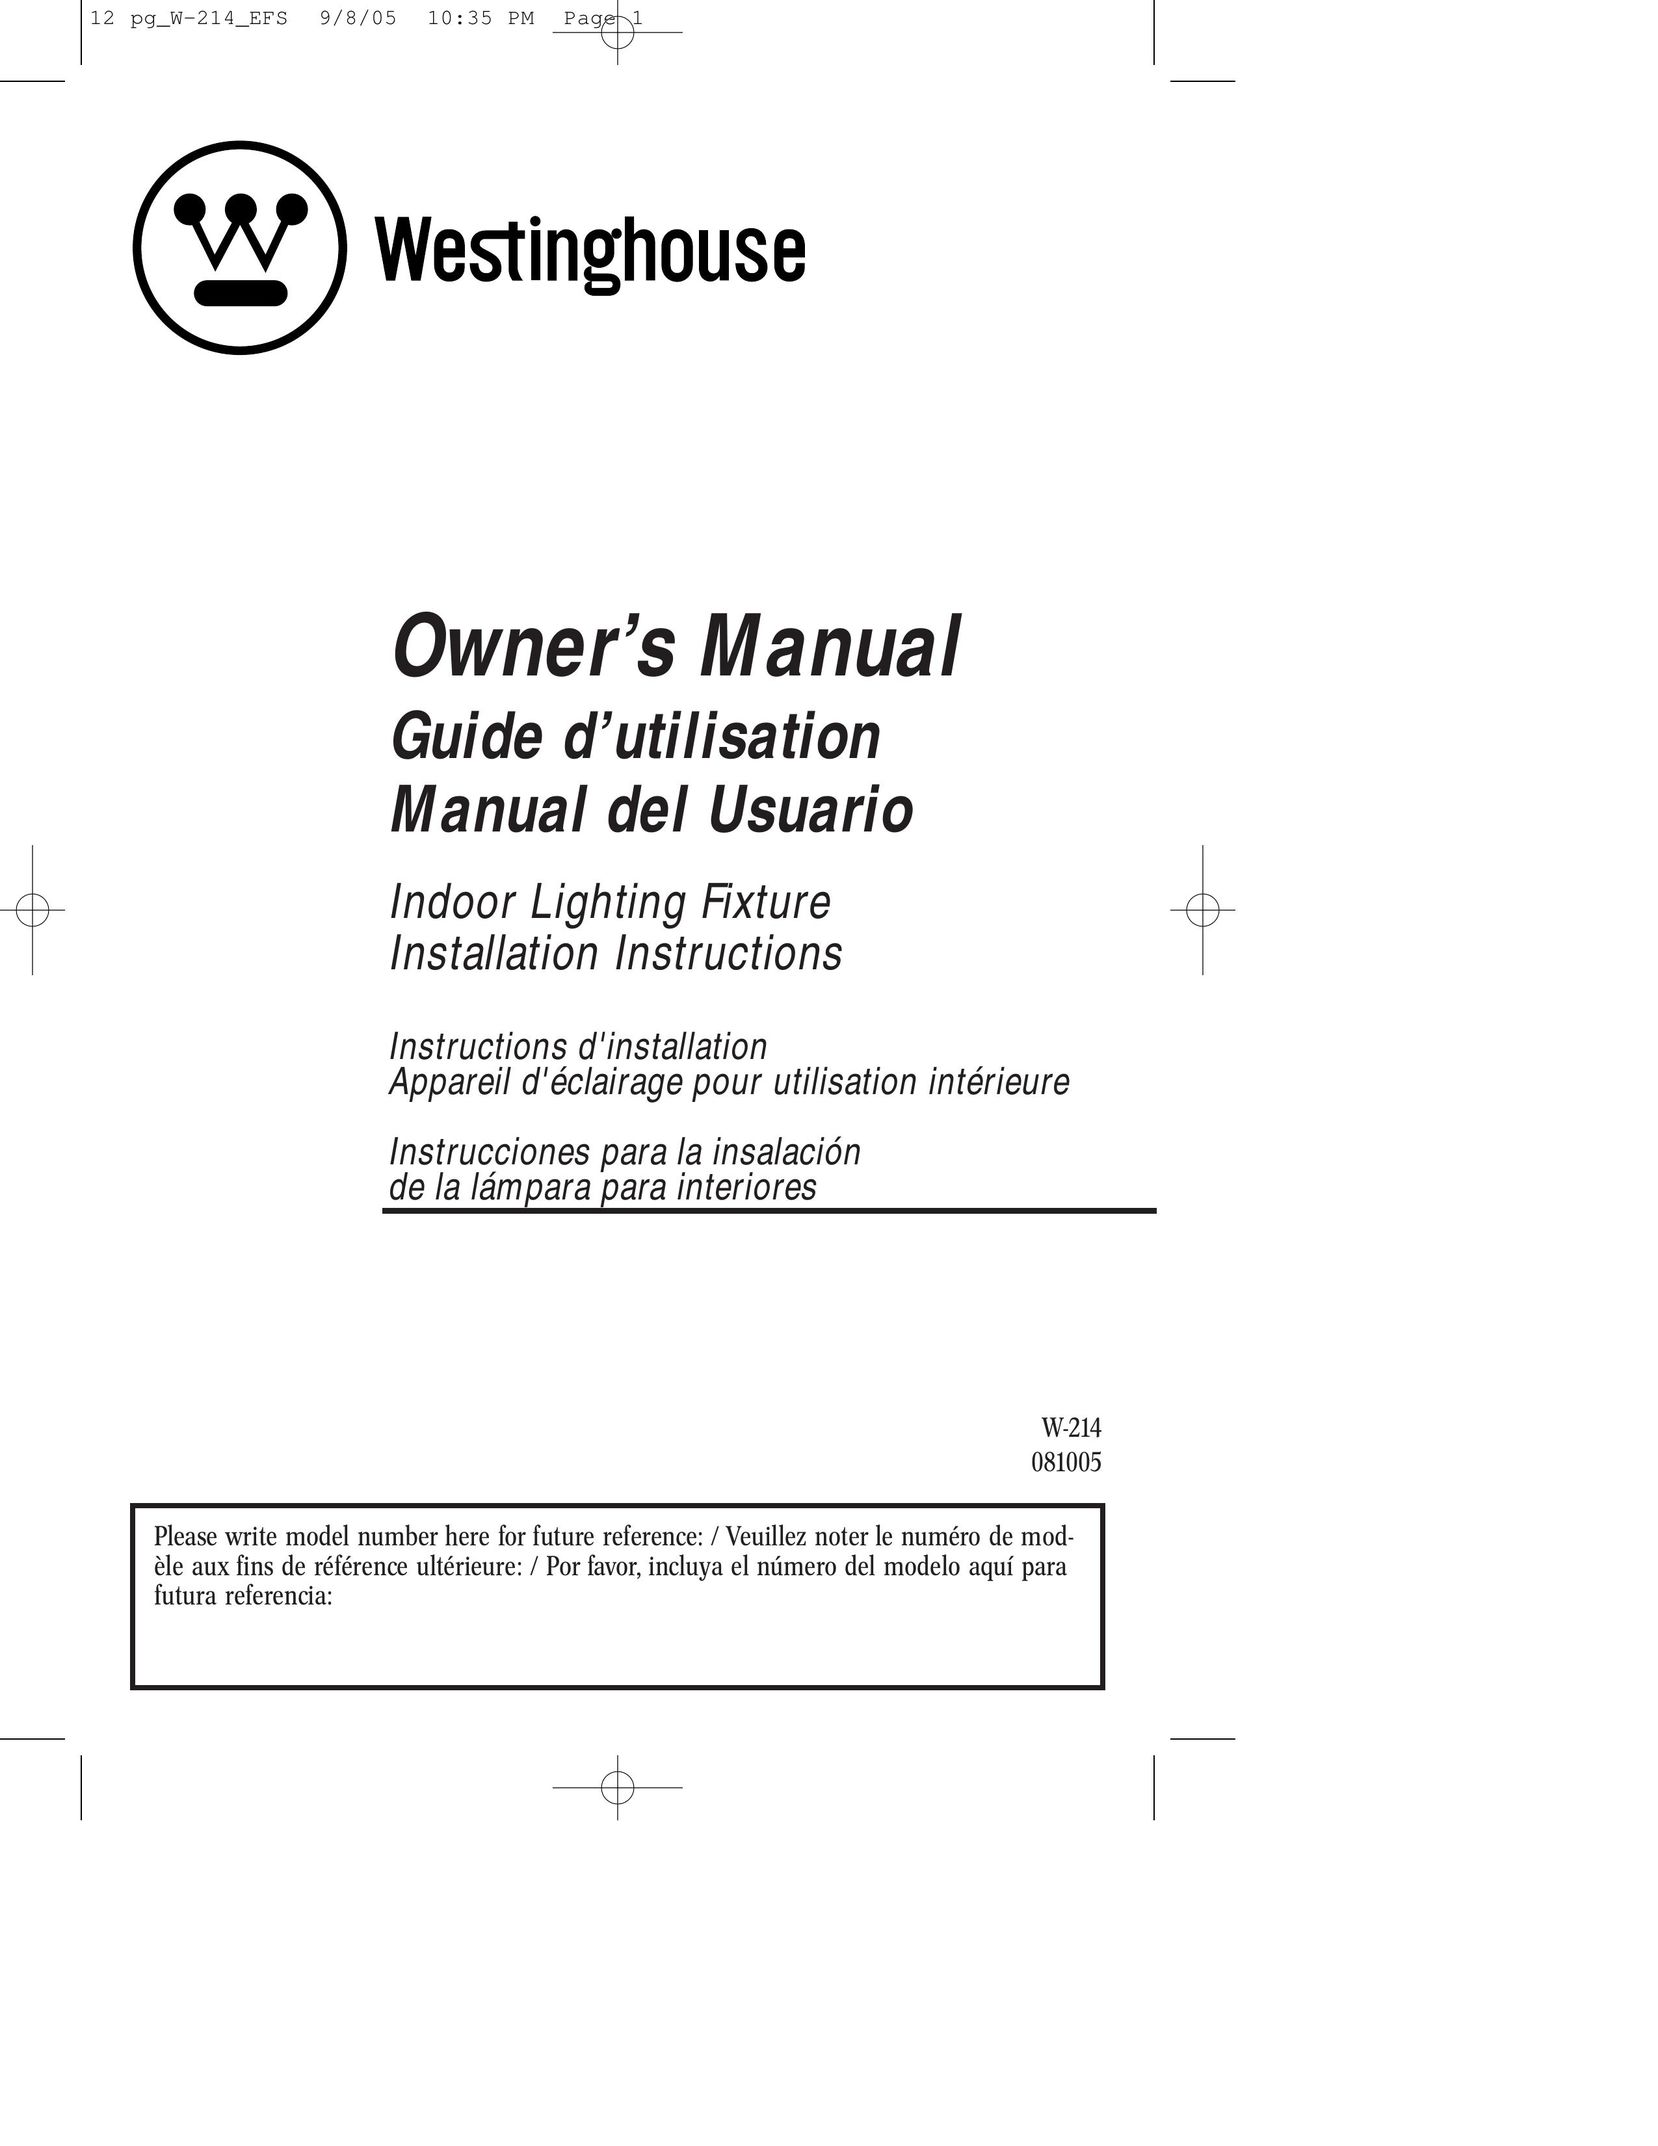 Westinghouse 81005 Indoor Furnishings User Manual